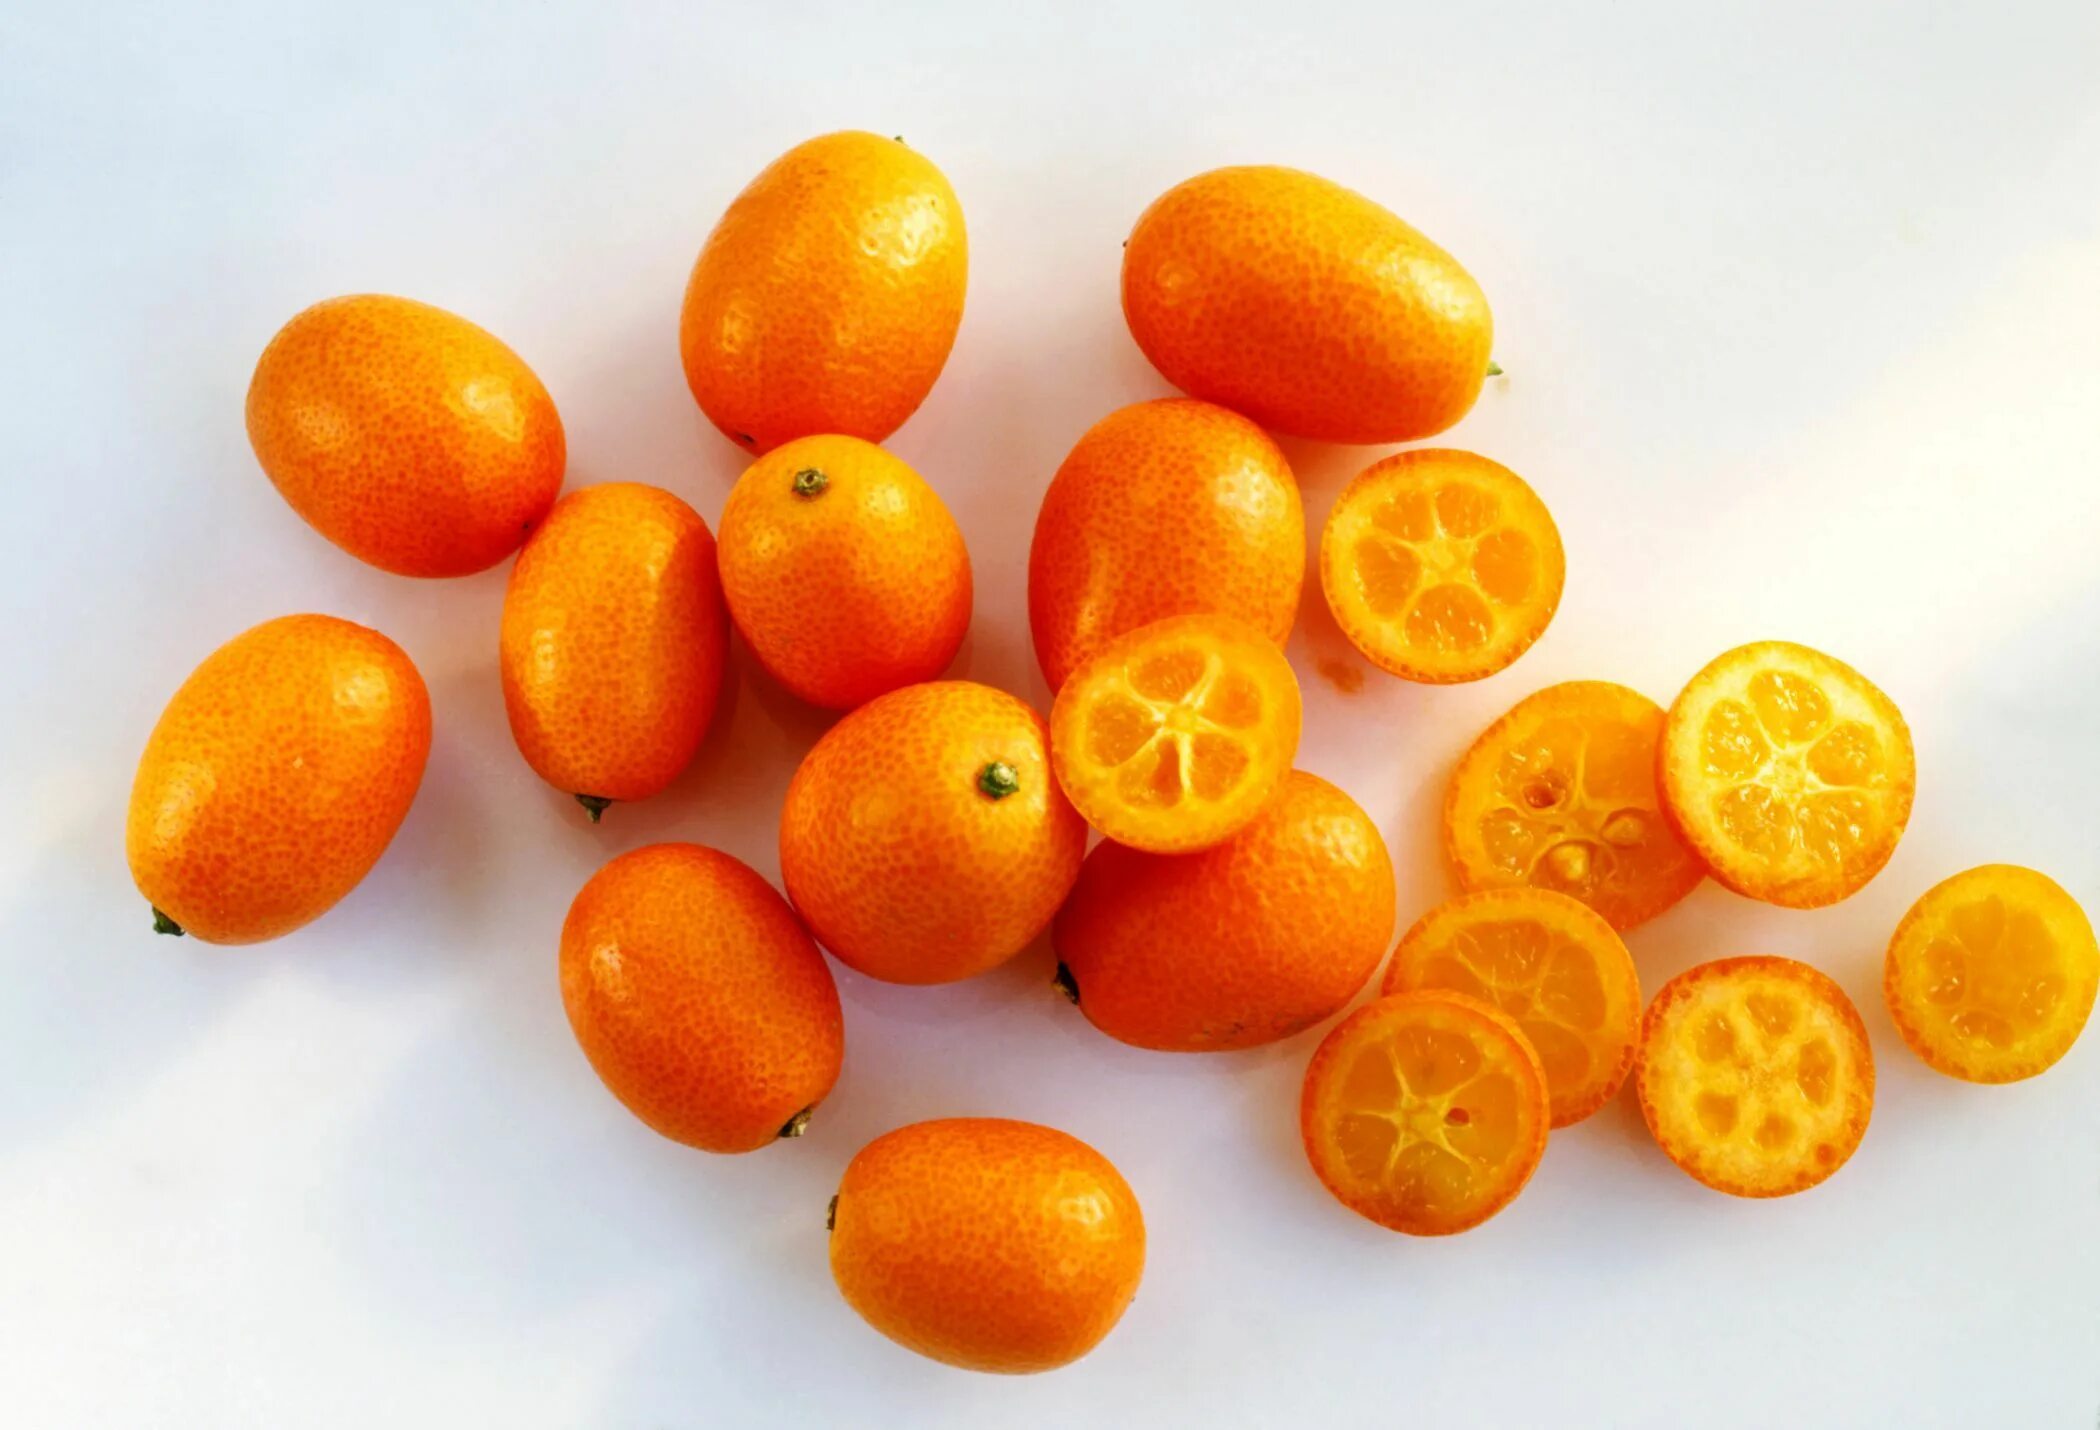 Кинкан кумкват фрукт. Кумкват мандарин. Кумкват апельсин. Кумкват цитрусовые. Апельсин фрукт или ягода